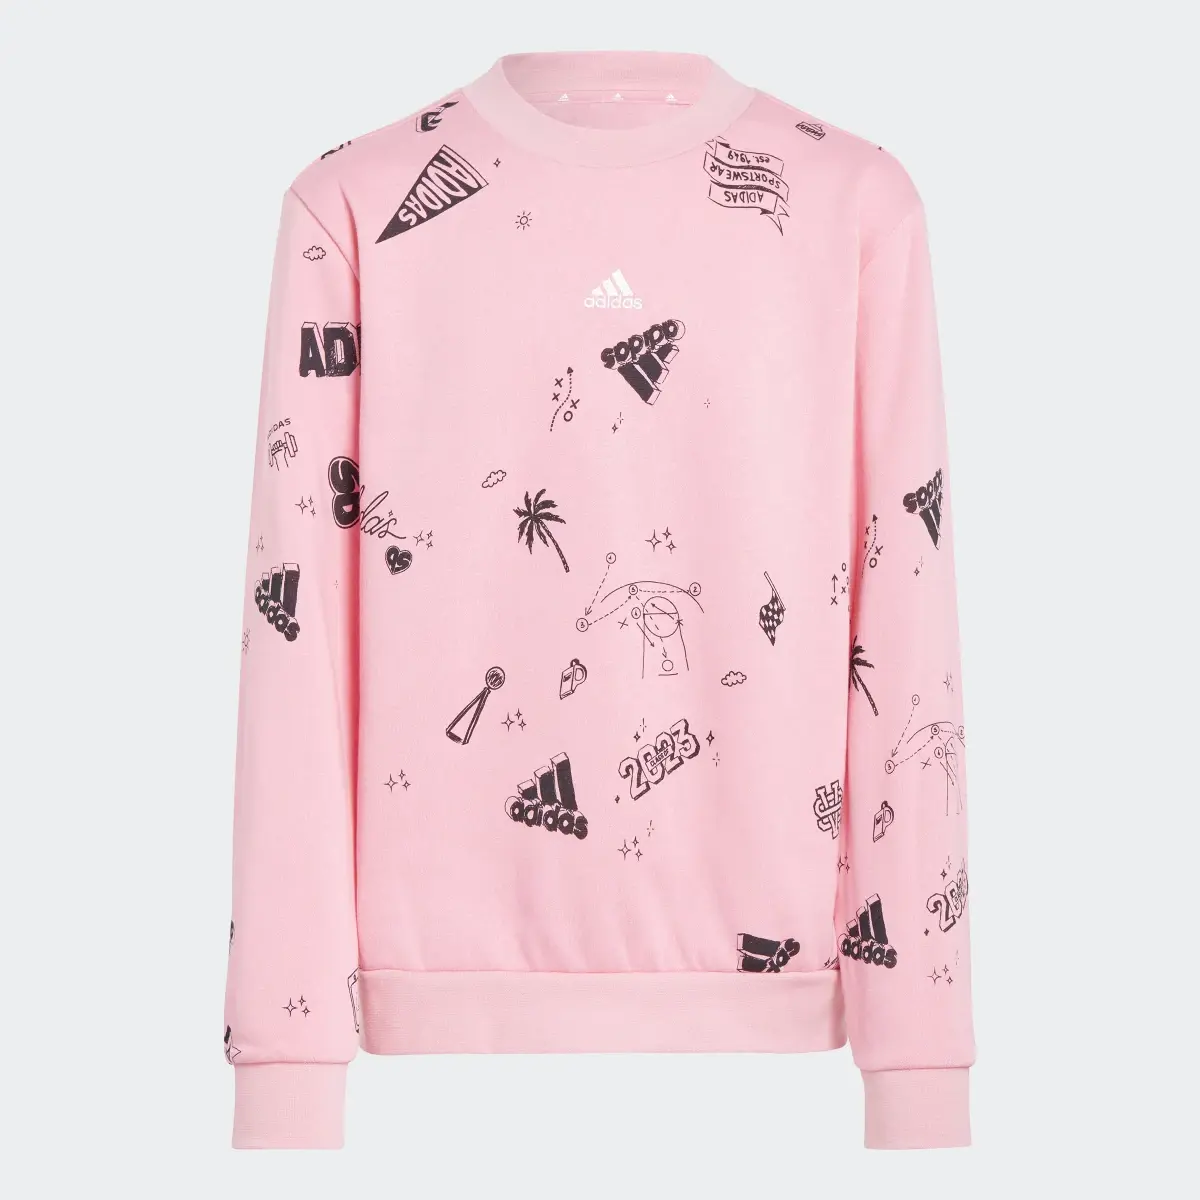 Adidas Sweatshirt Brand Love – Criança. 1